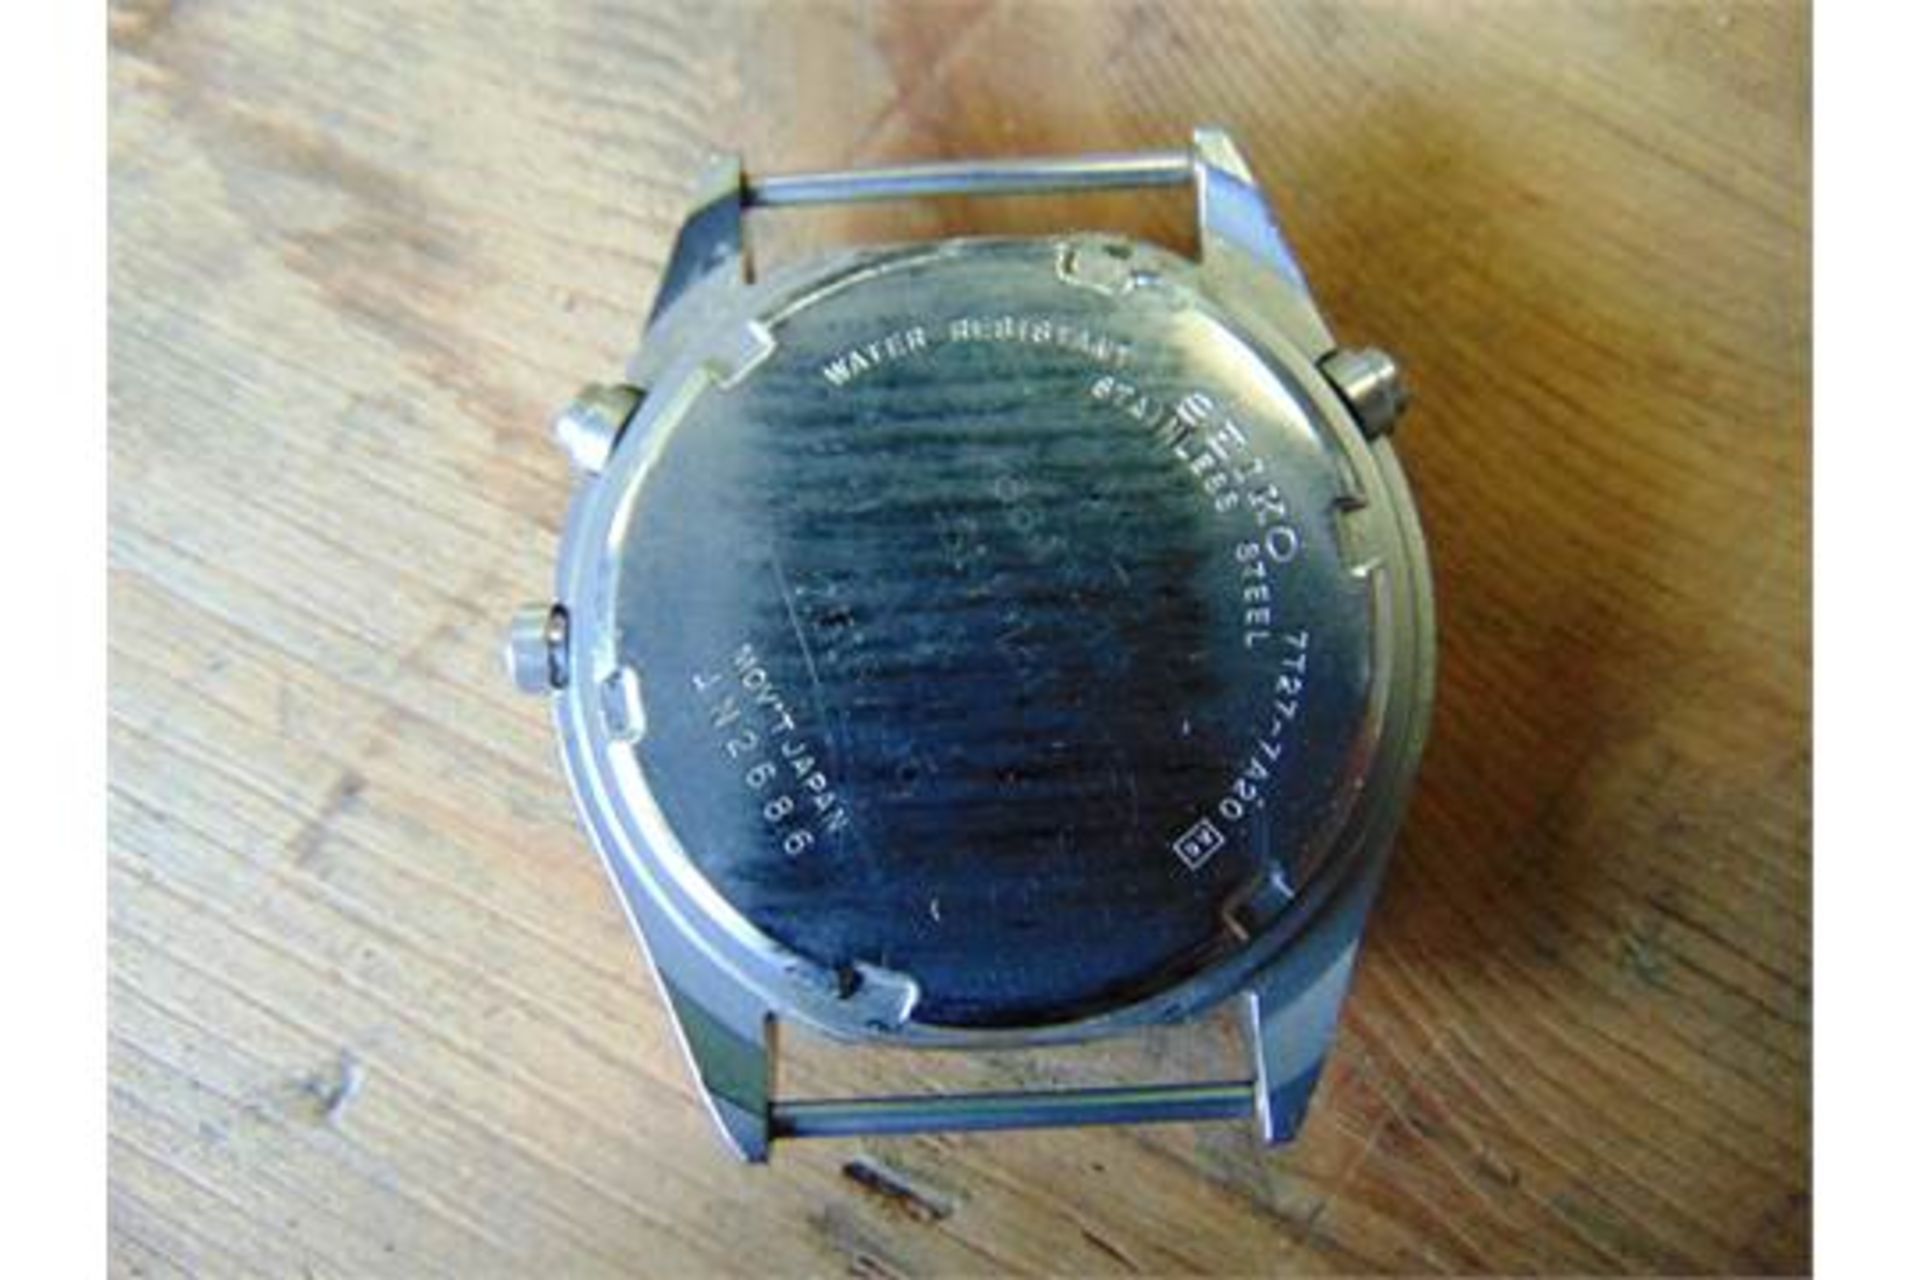 Seiko Pilots Chronograph generation 2 - Image 5 of 5